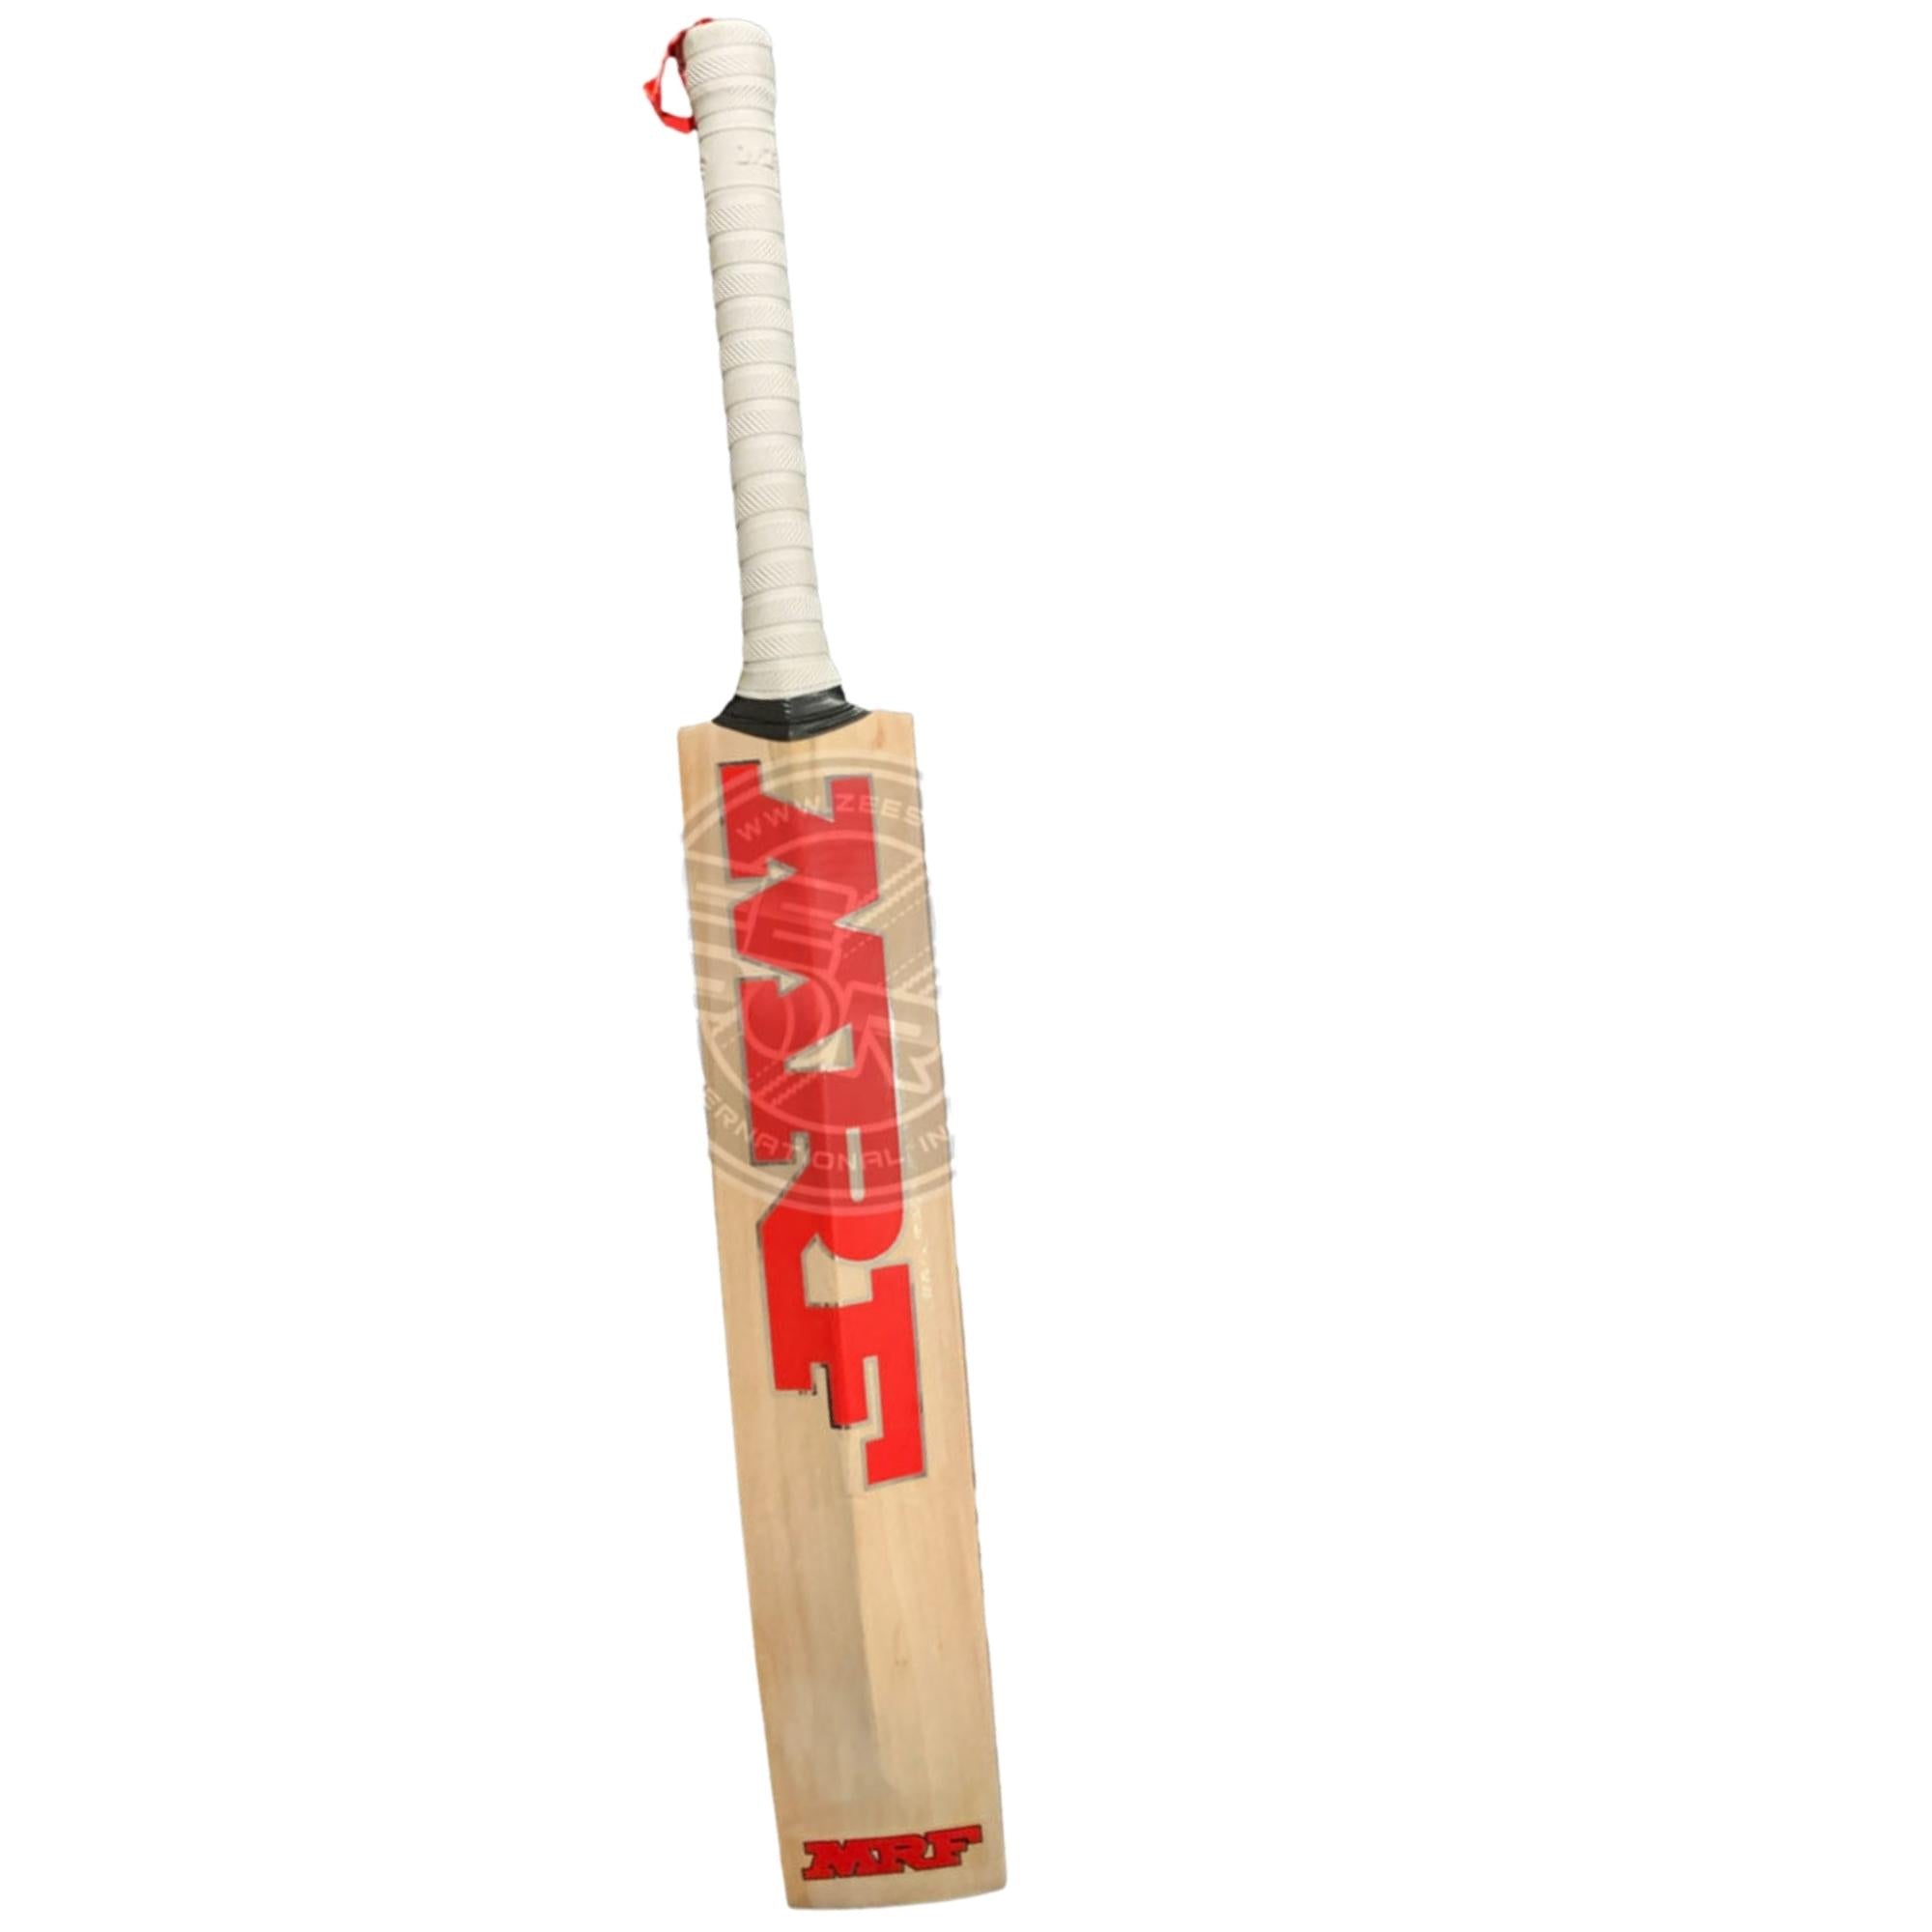 MRF Legend VK18 3.0 Virat Kohli Edition Cricket Bat